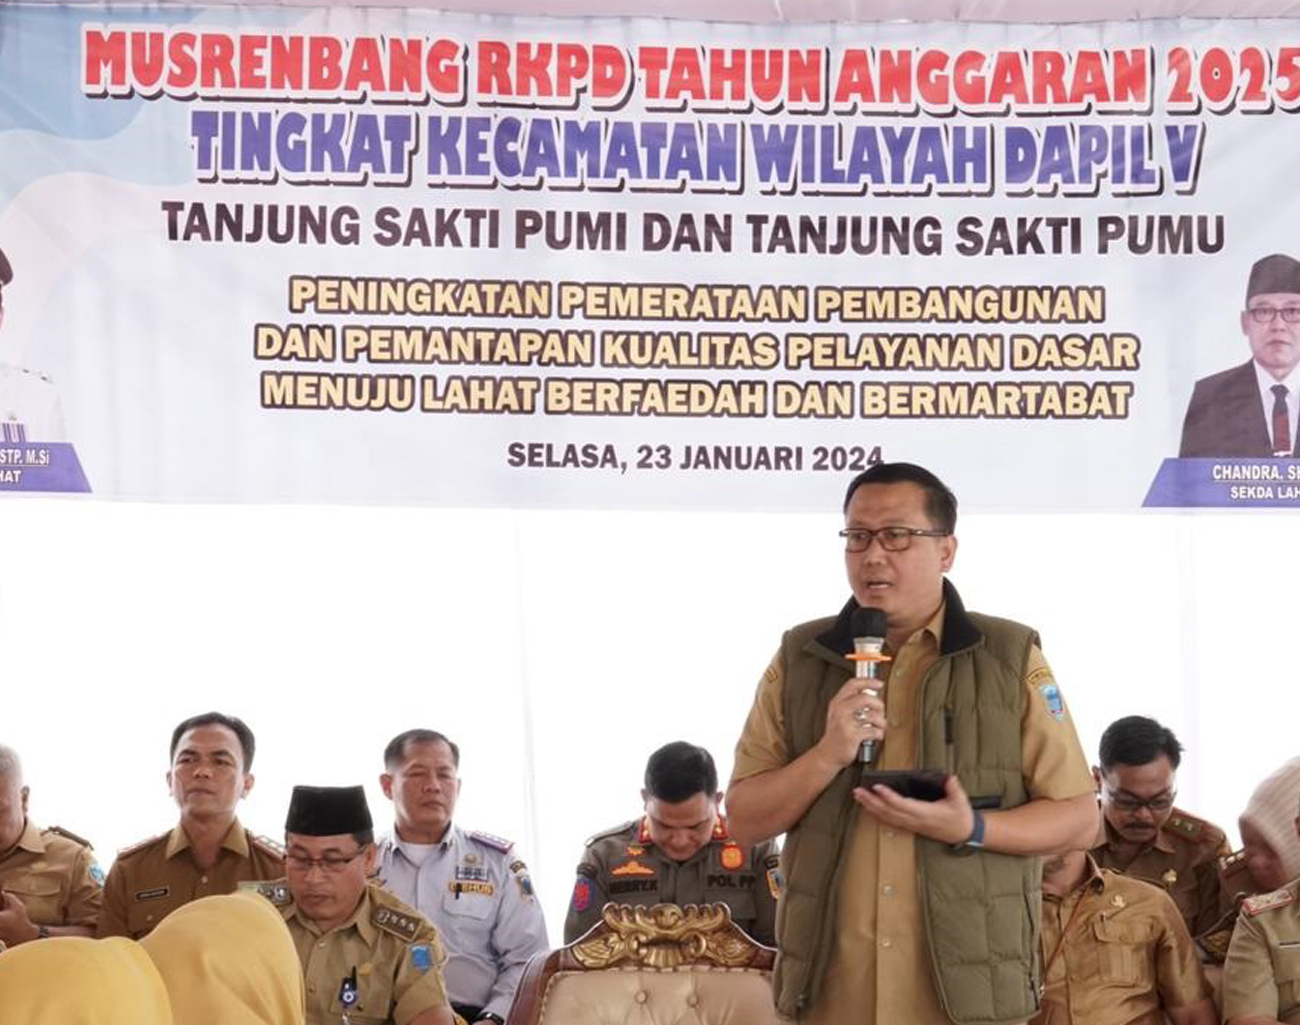 Inilah Sambutan Pj Bupati Lahat Muhammad Farid pada Acara Musrenbang RKPD Tahun Anggaran 2025 di Tanjung Sakti